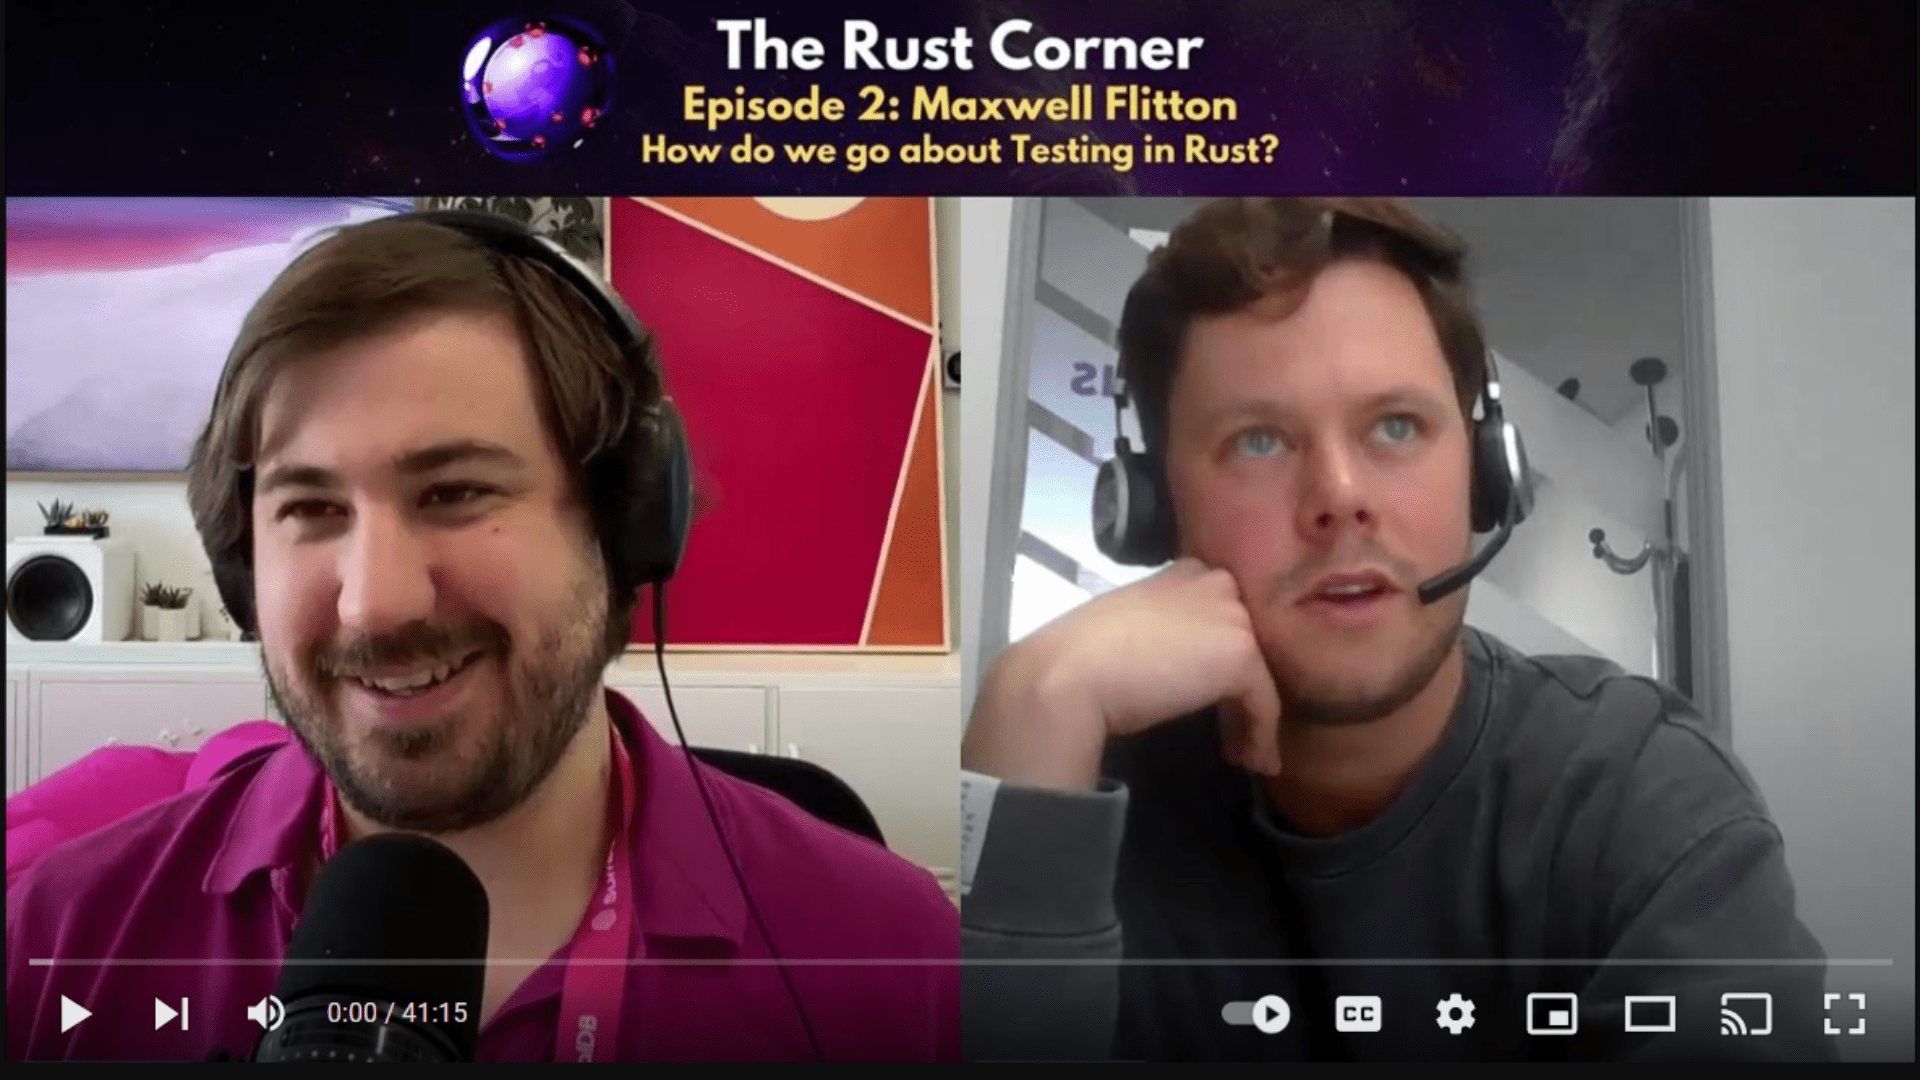 The Rust Corner Episode 2: Maxwell Flitton